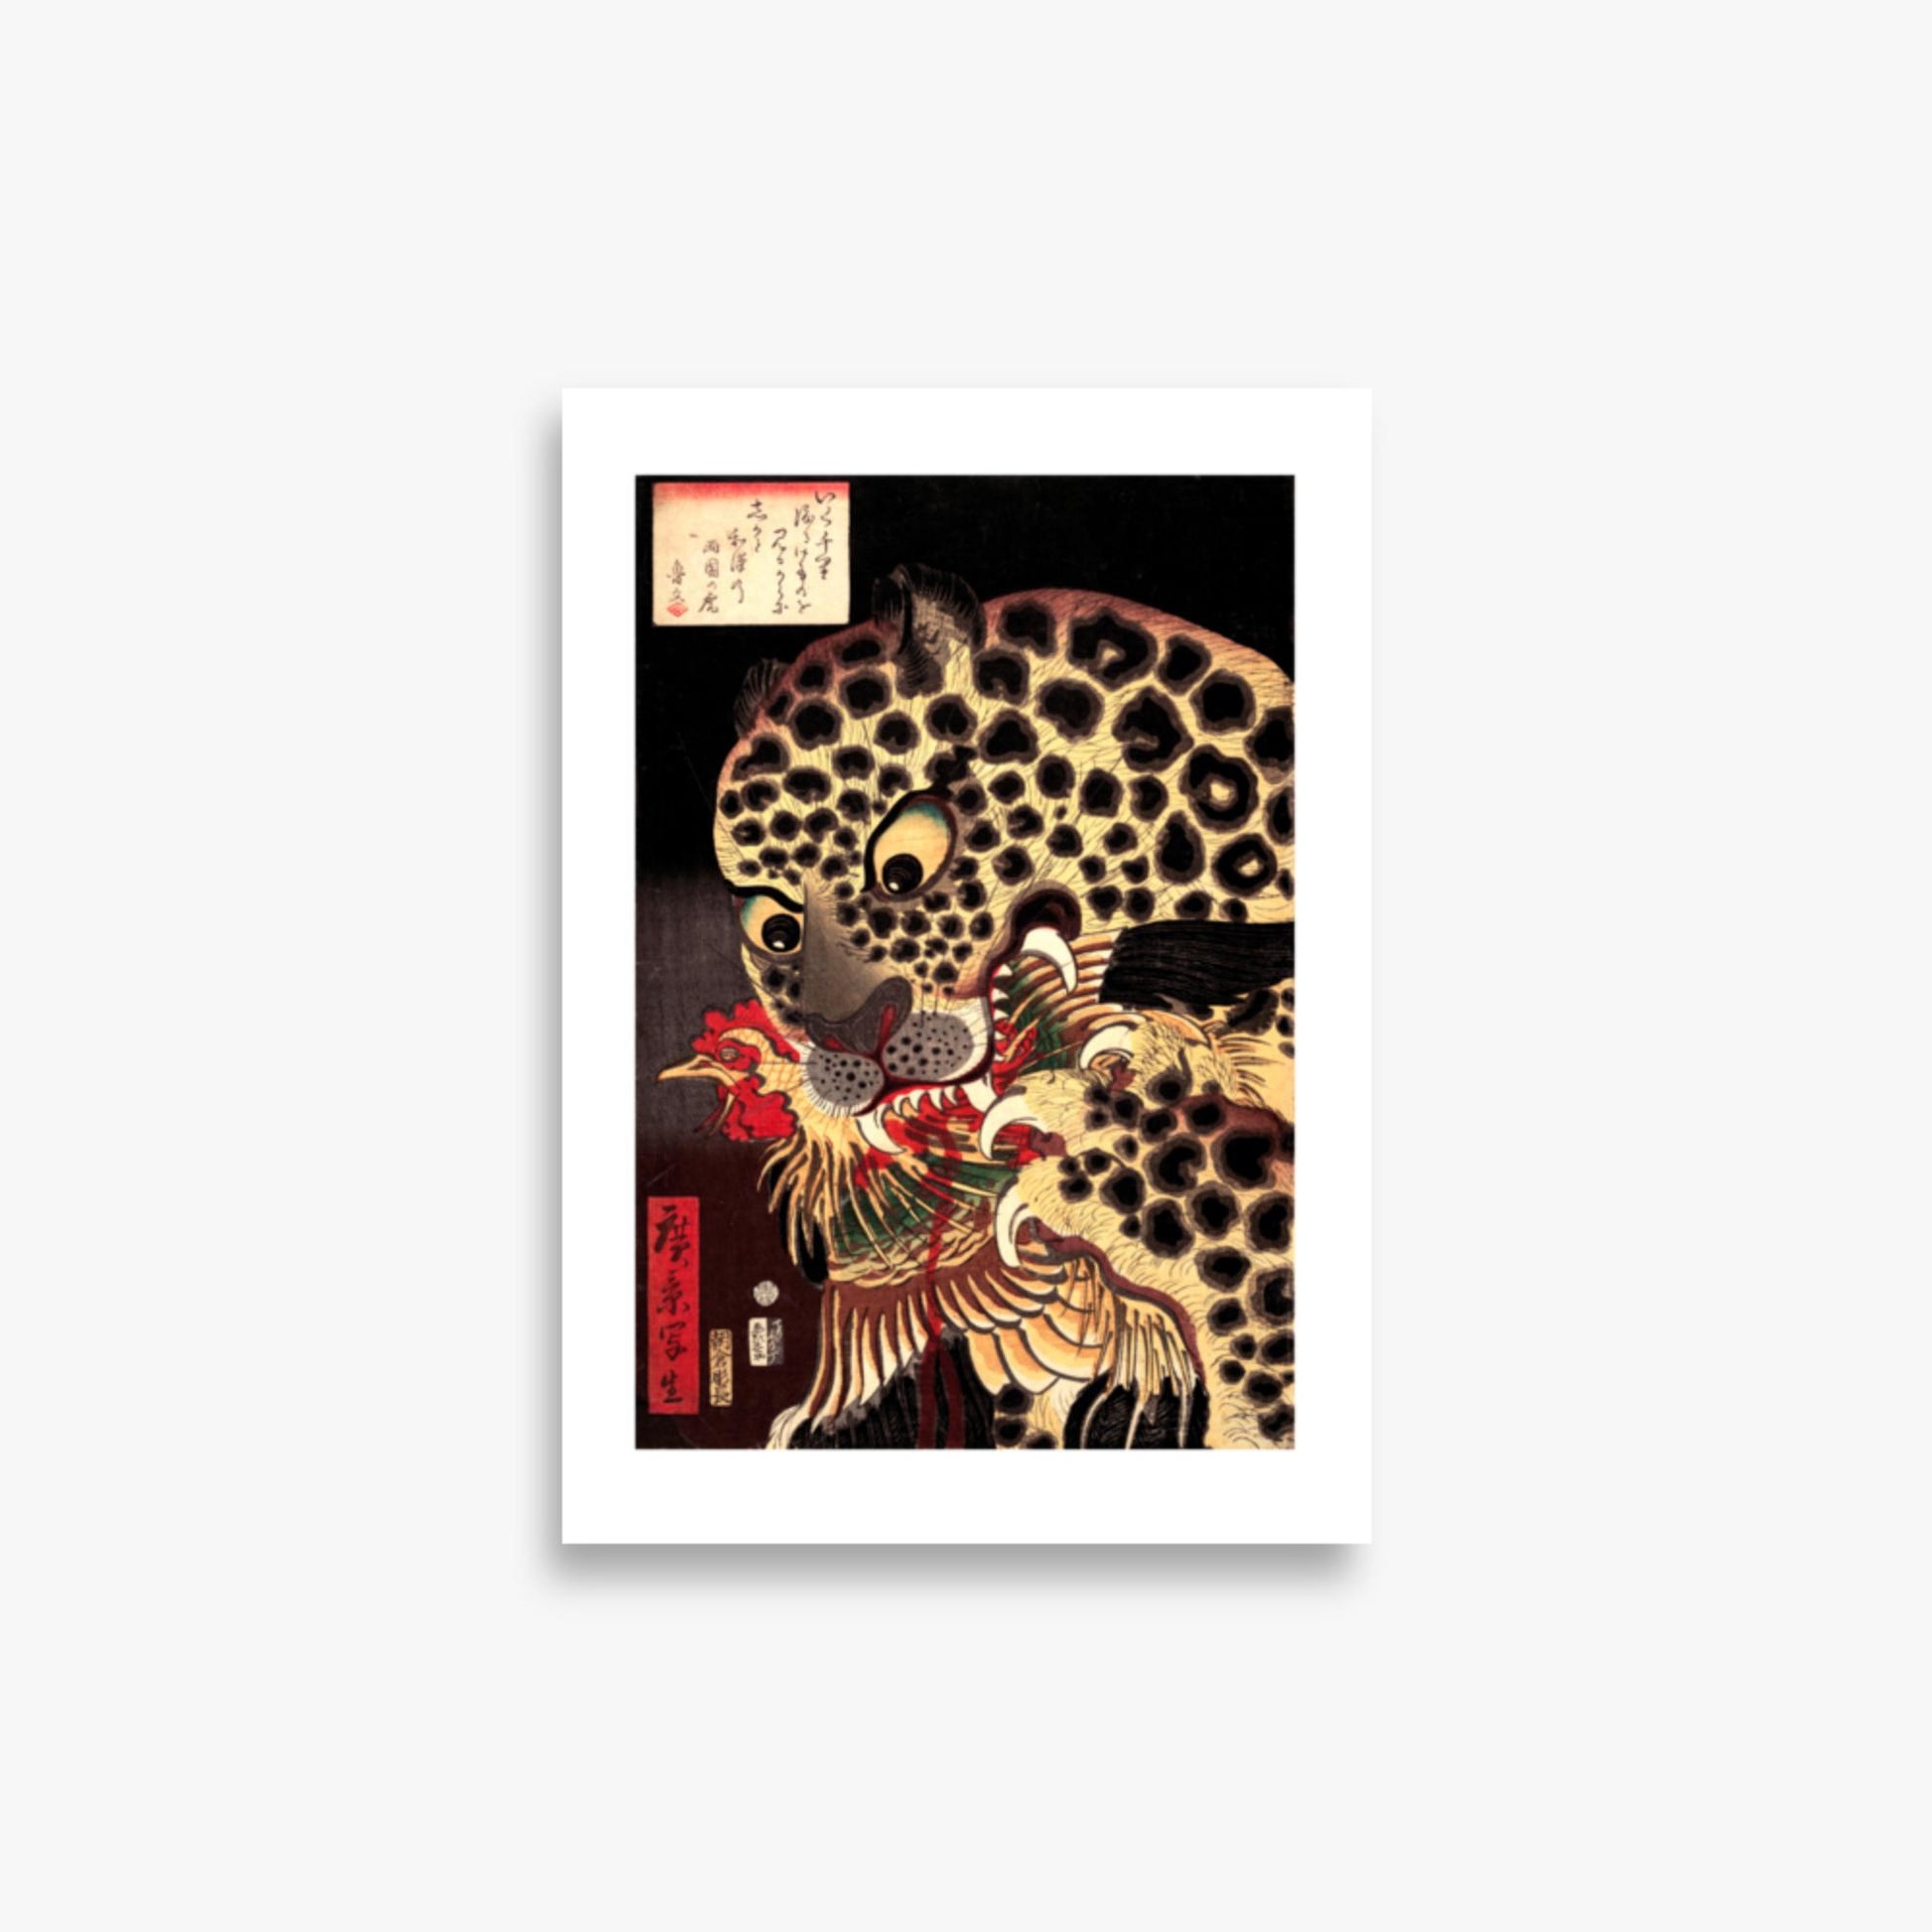 Utagawa Hirokage - The Tiger of Ryōkoku 21x30 cm Poster